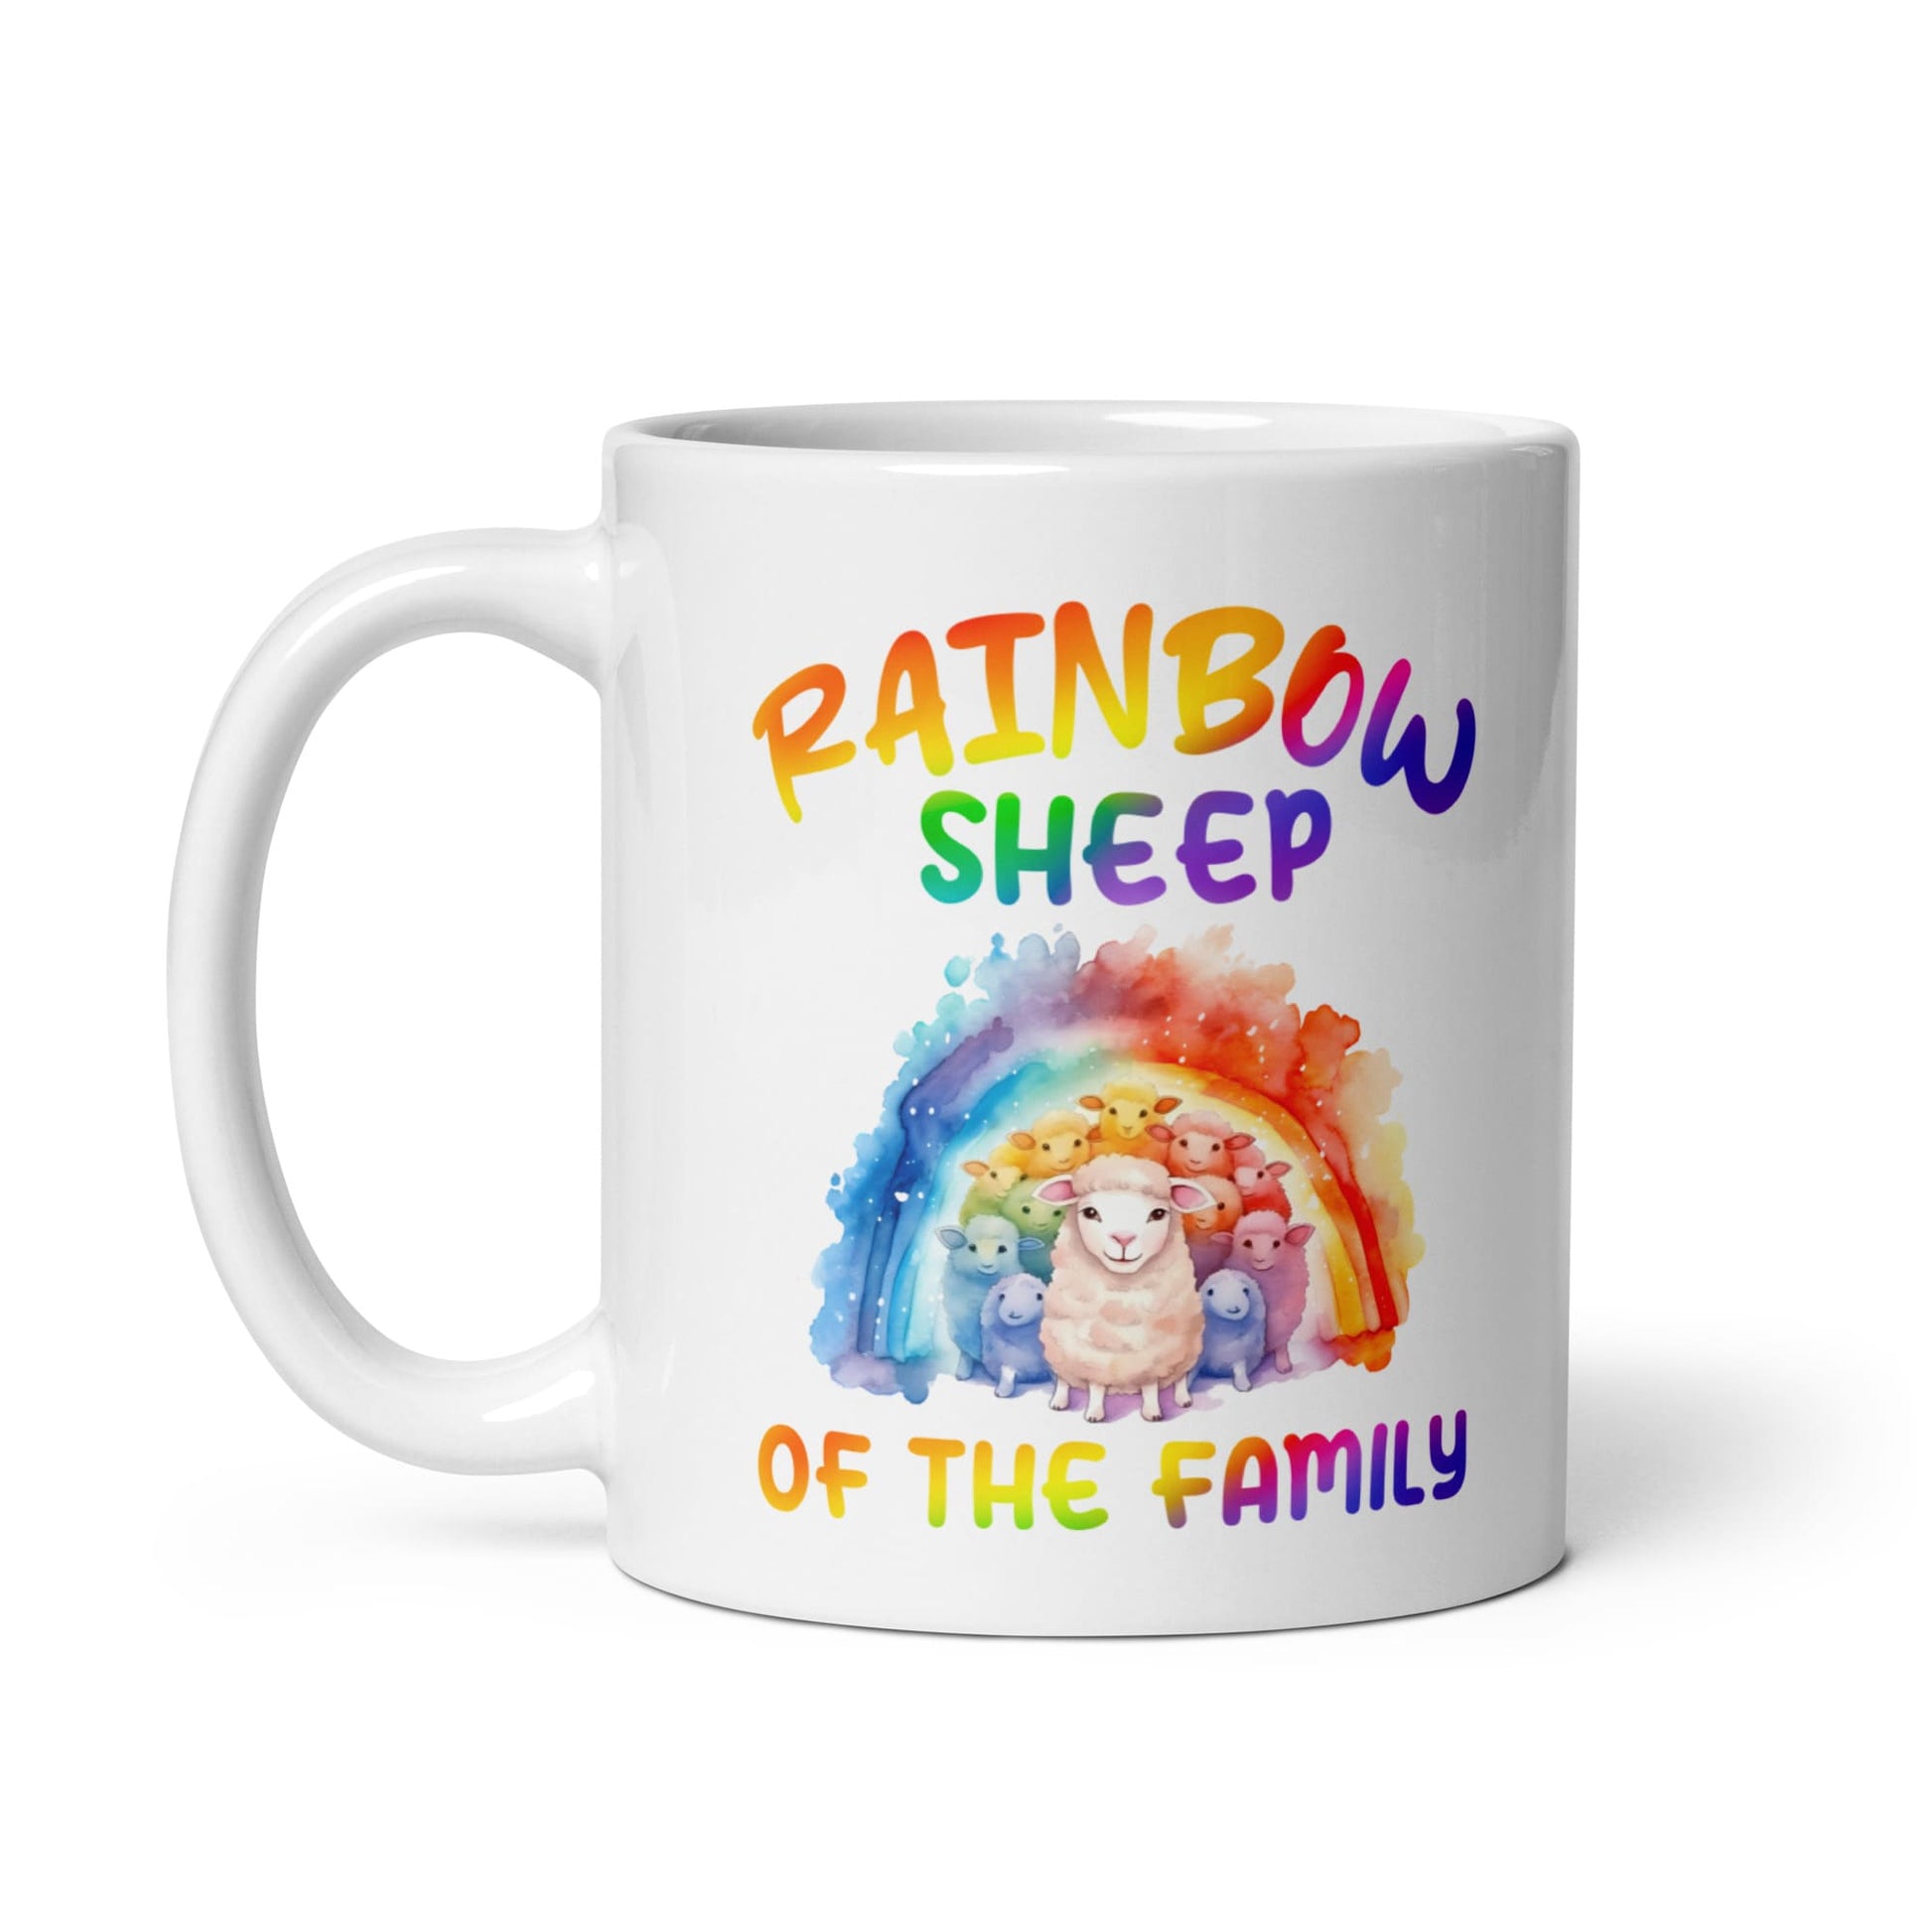 LGBTQ pride mug, rainbow sheep of the family coffee or tea cup left